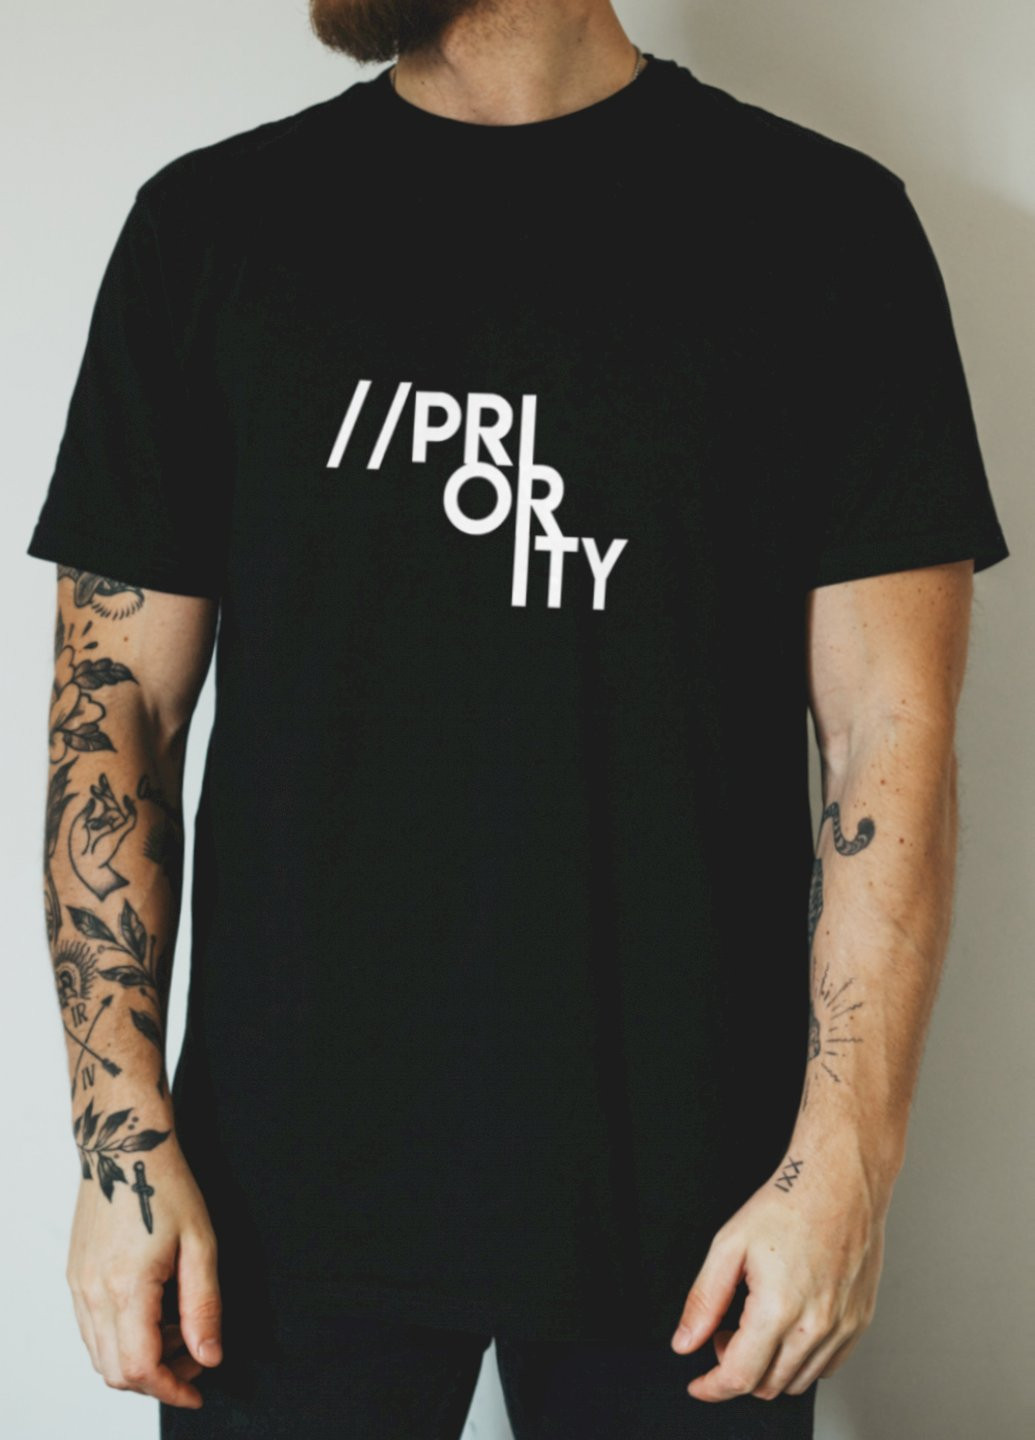 Черная футболка "//priority" Ctrl+